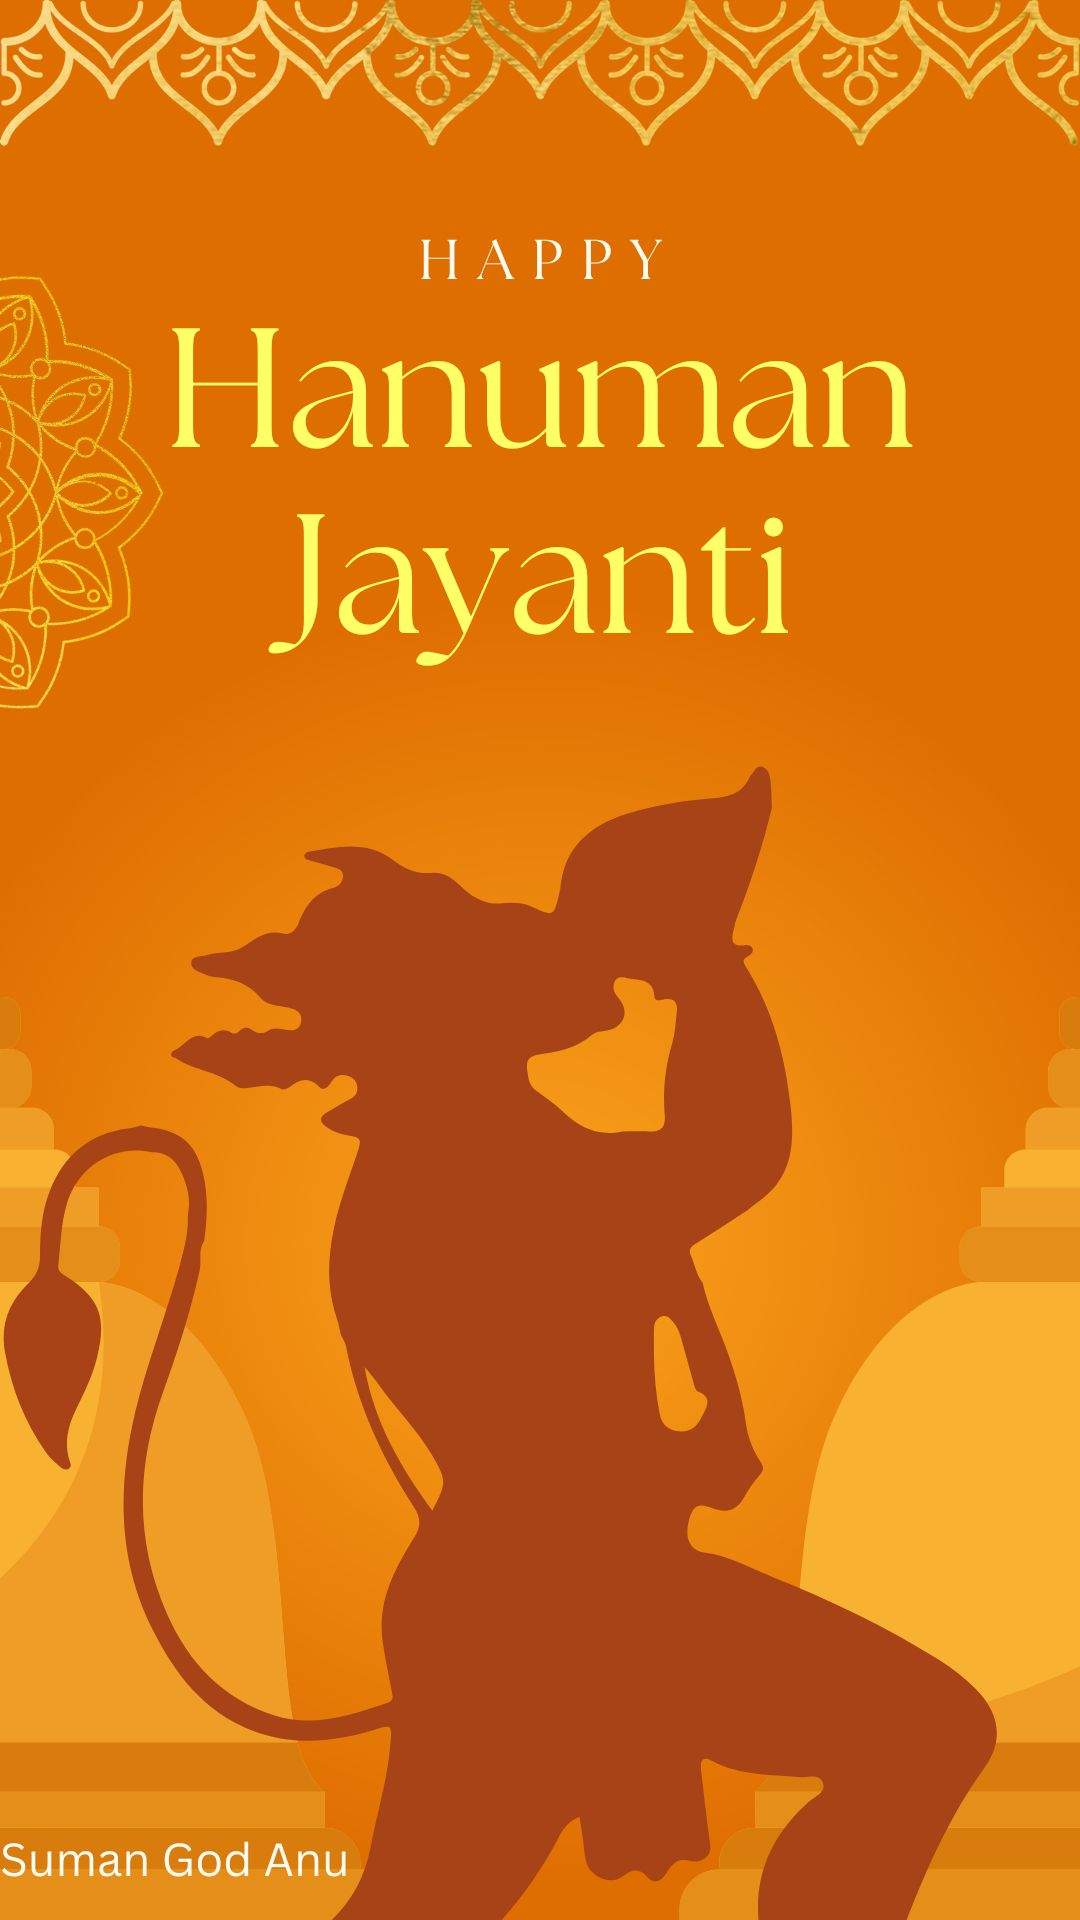 Celebrating Hanuman Jayanti: The Divine Birth of Lord Hanuman